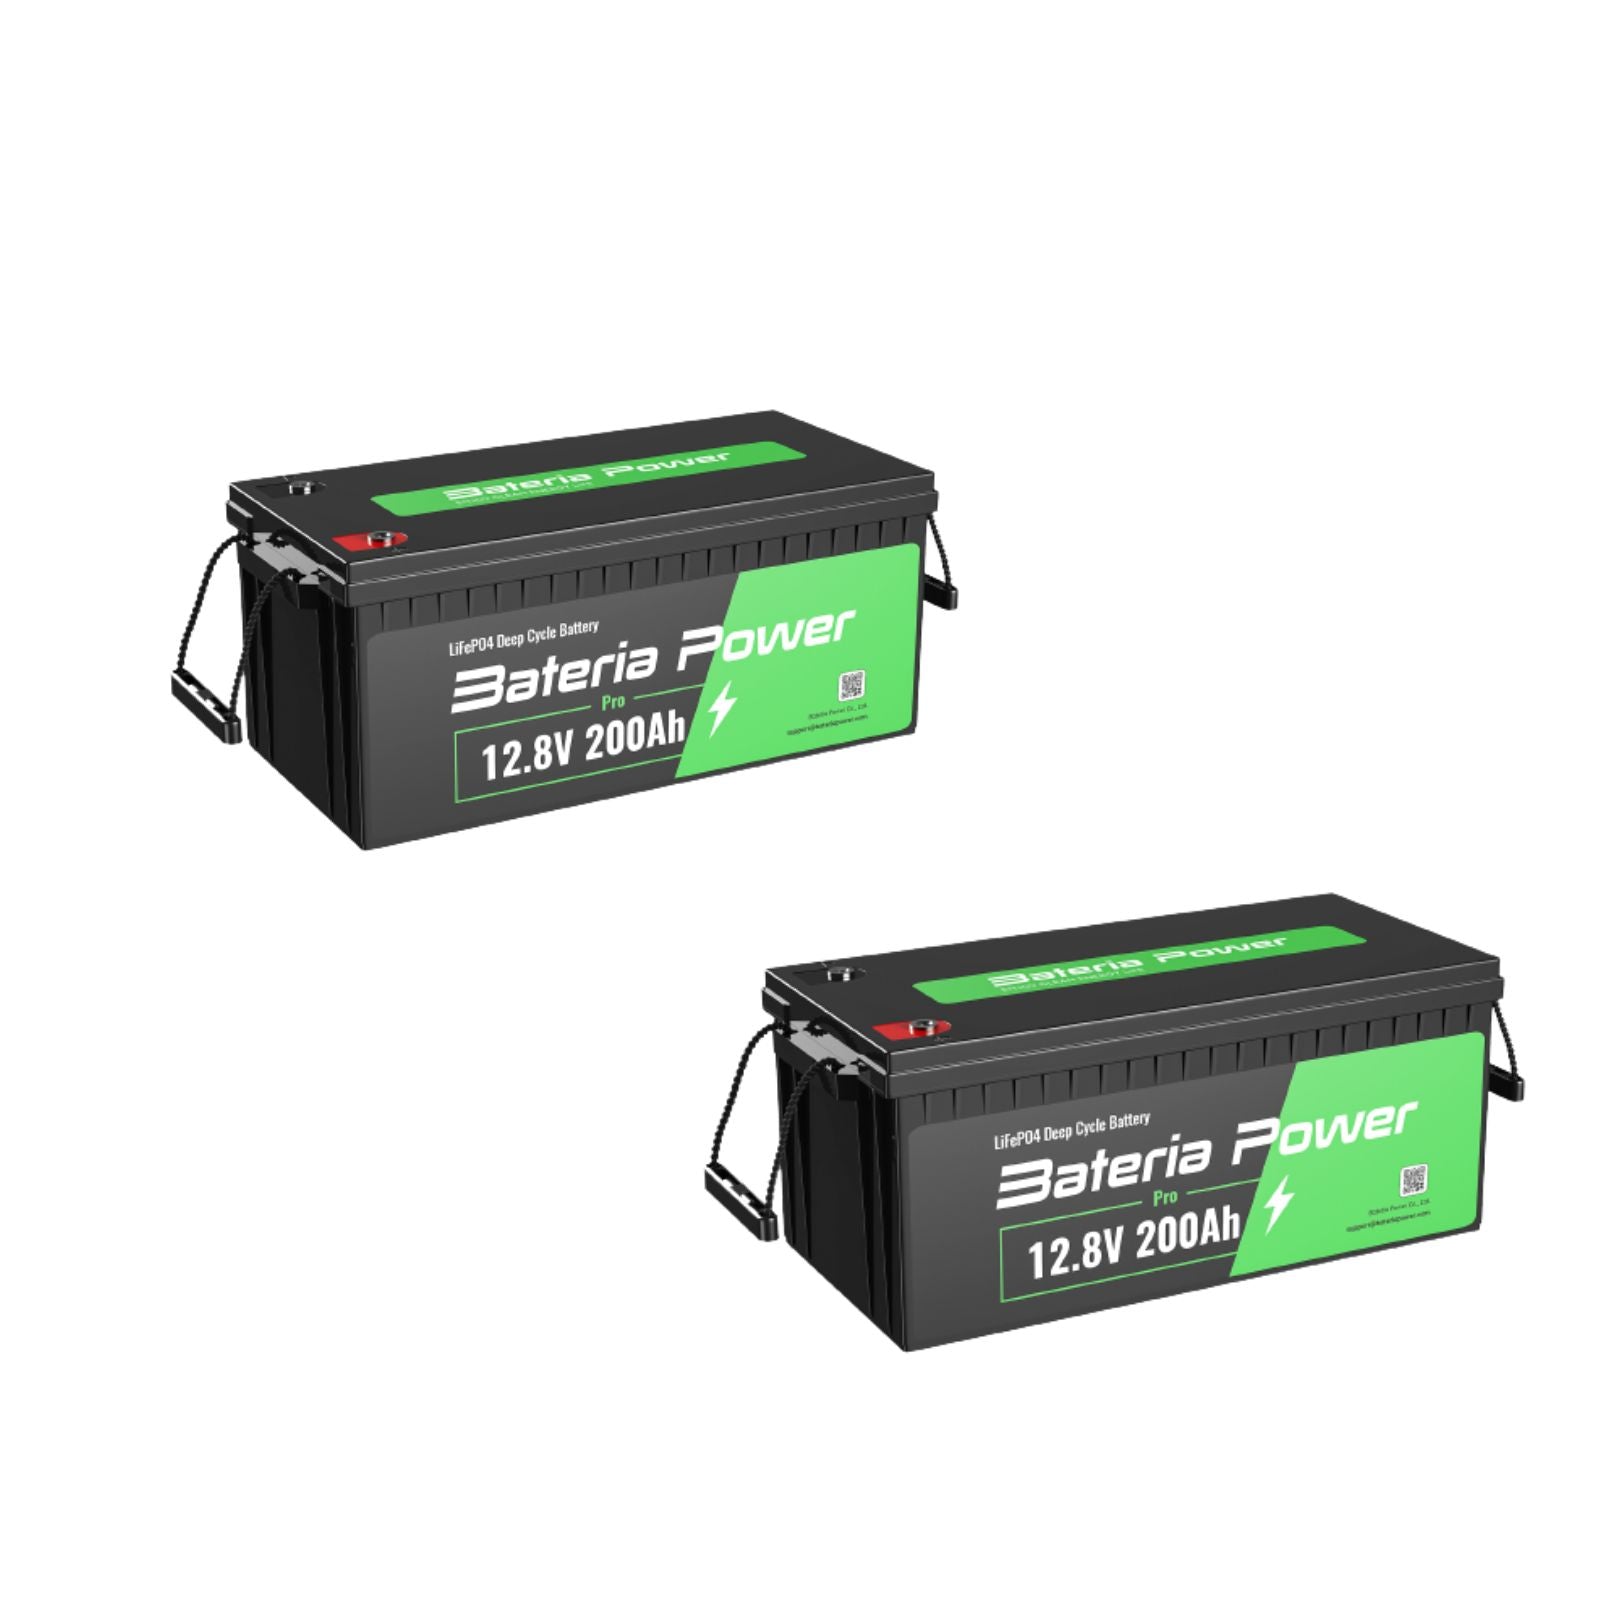 Bateria Power 12V LiFePO4 Battery – bateriapower